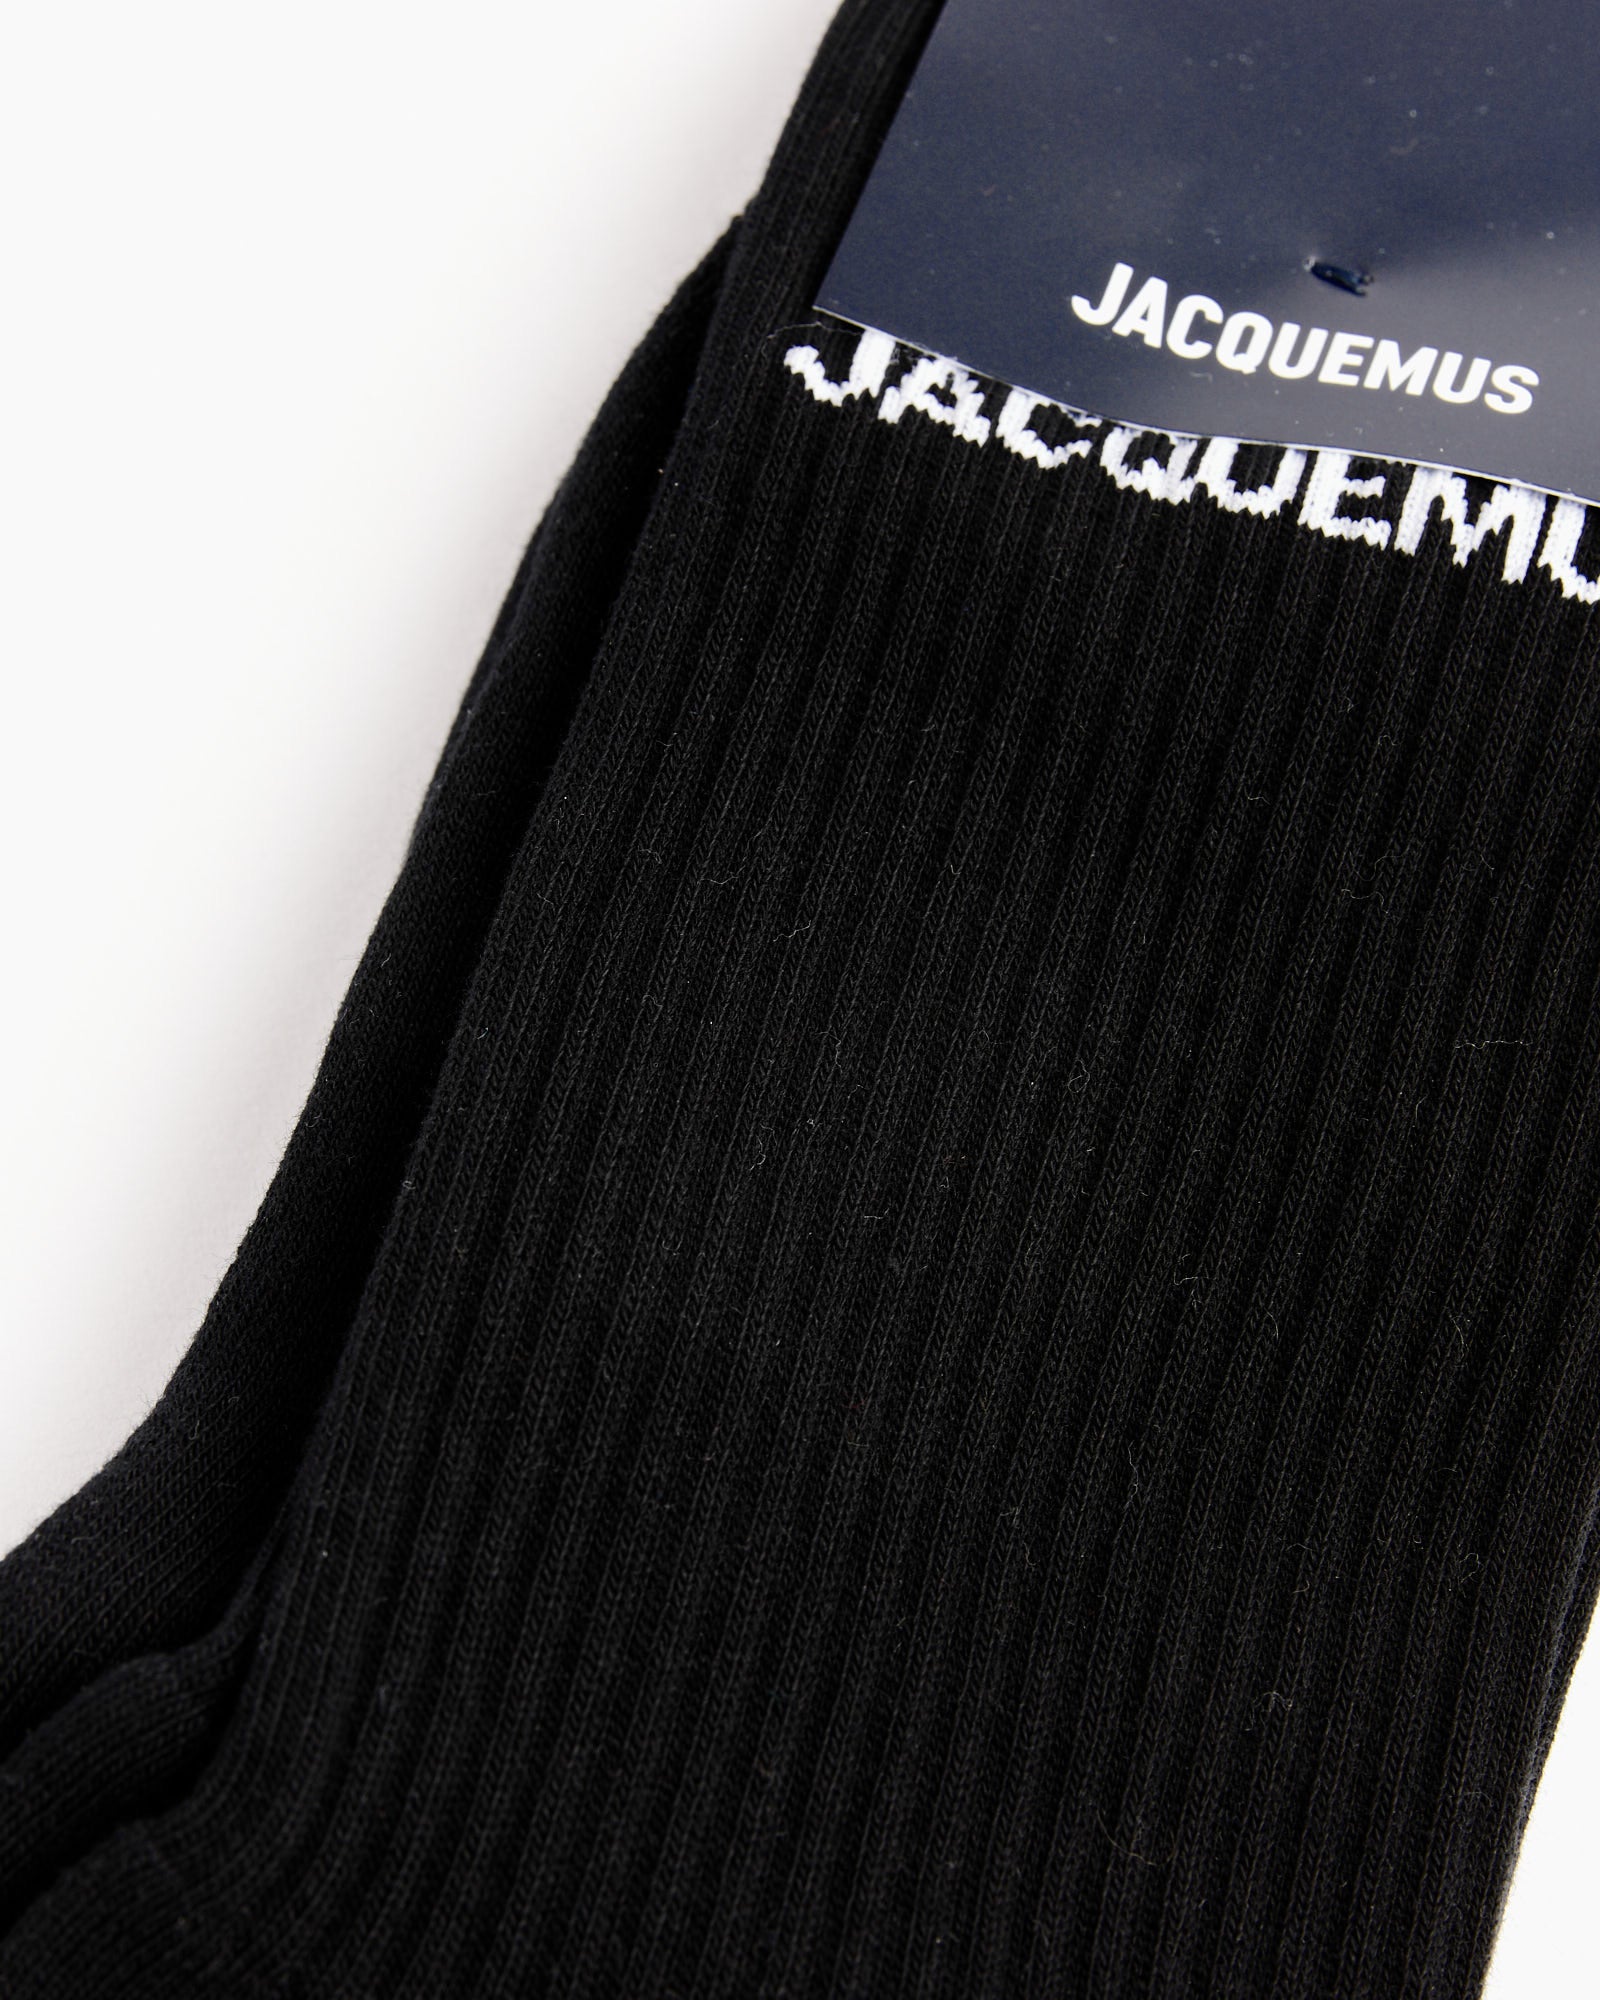 Les Chaussettes Socks in Black